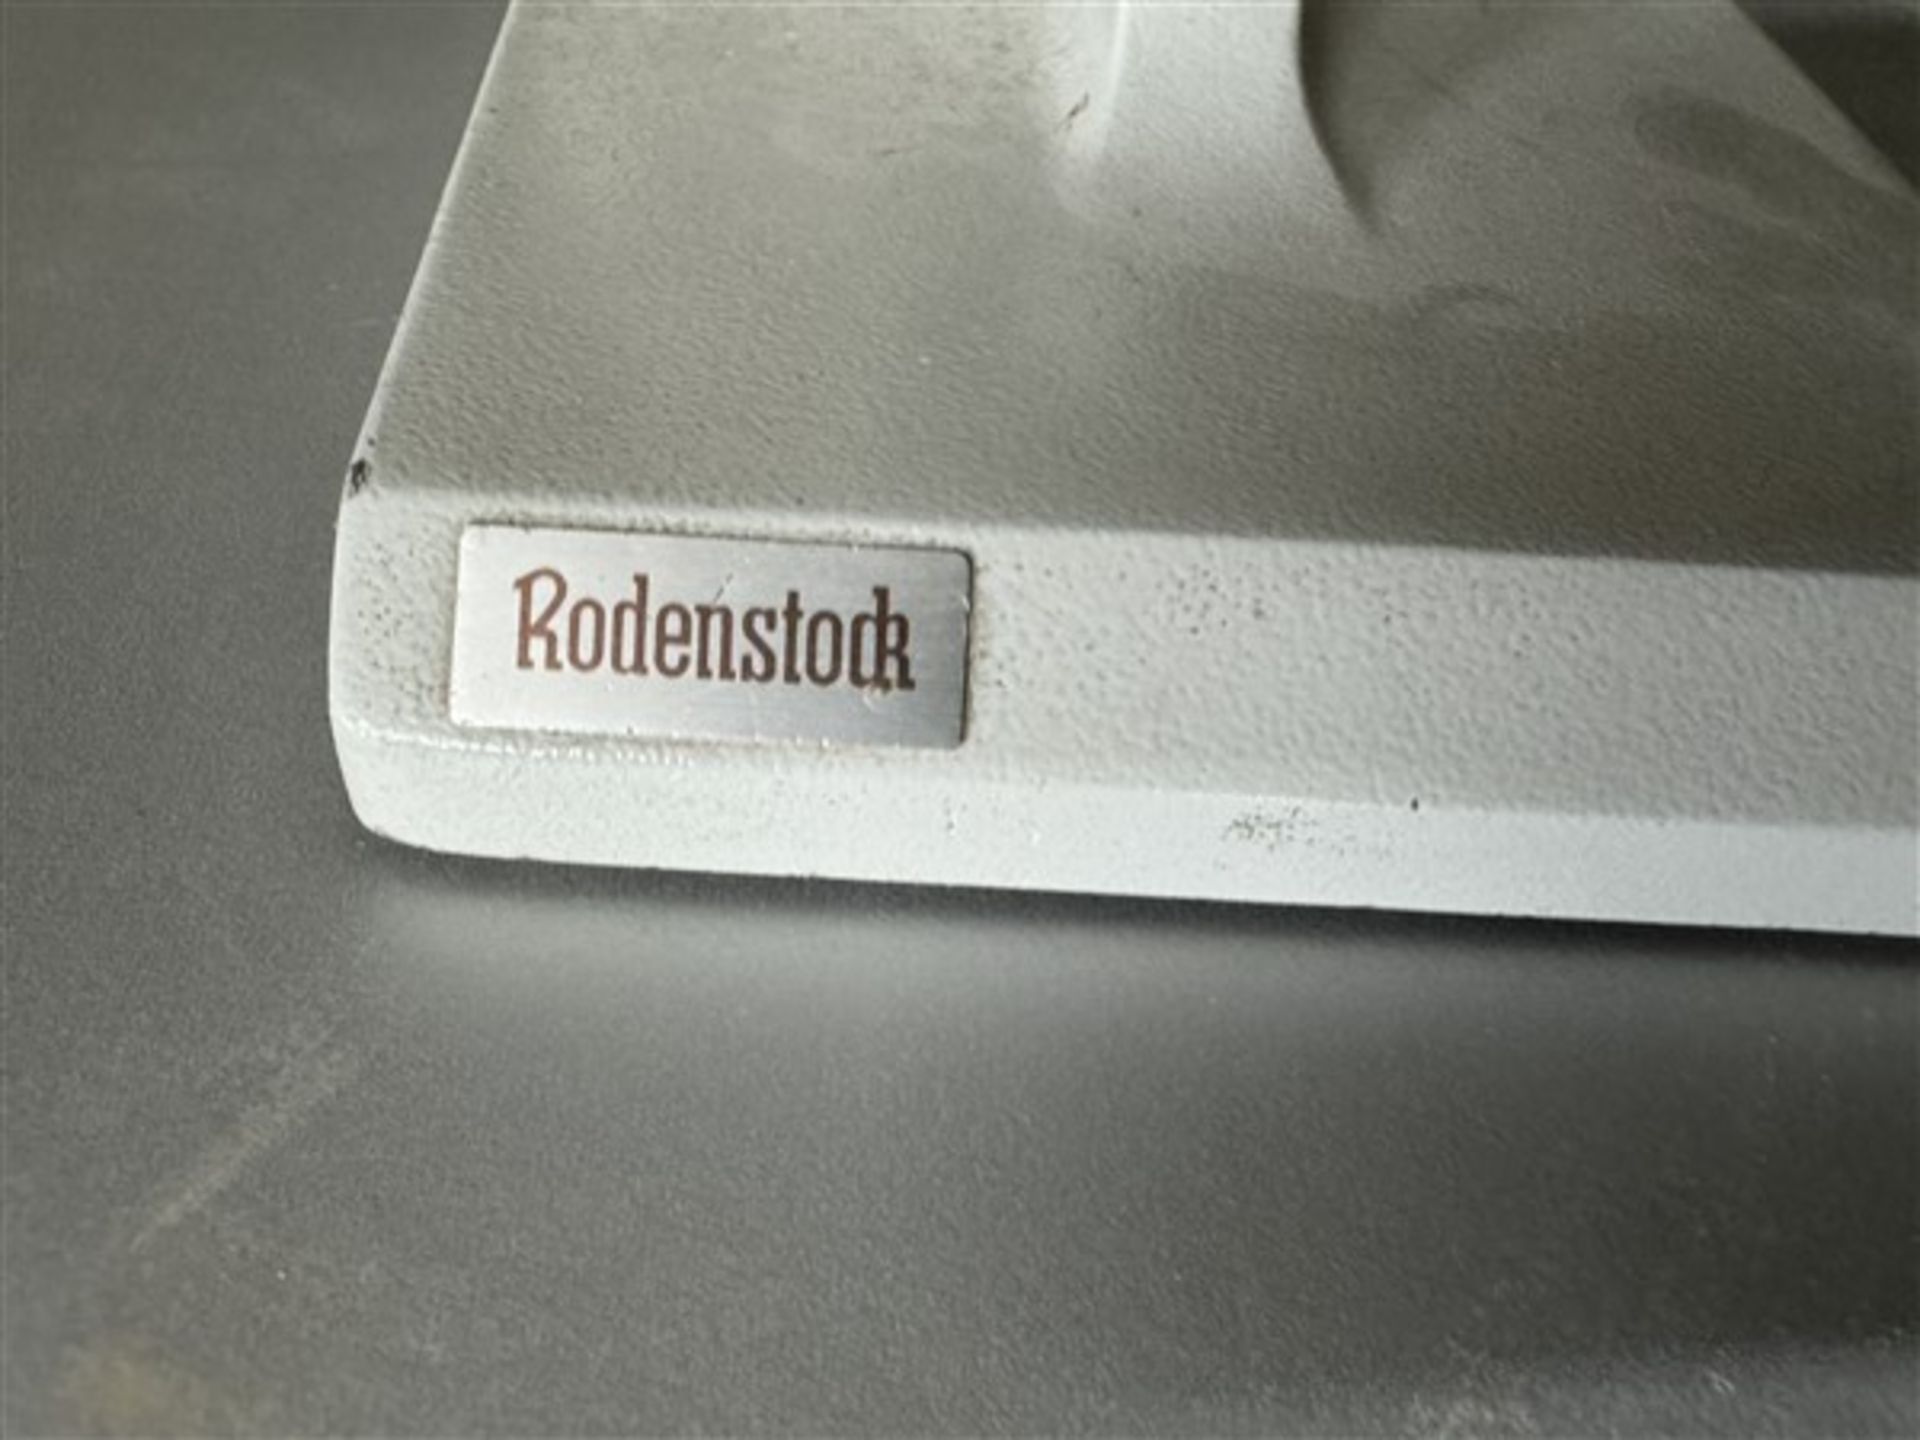 Roderistock Focimeter monocular, model 29092/001, 240v and Unbranded dual buffer, 240v - Image 2 of 4